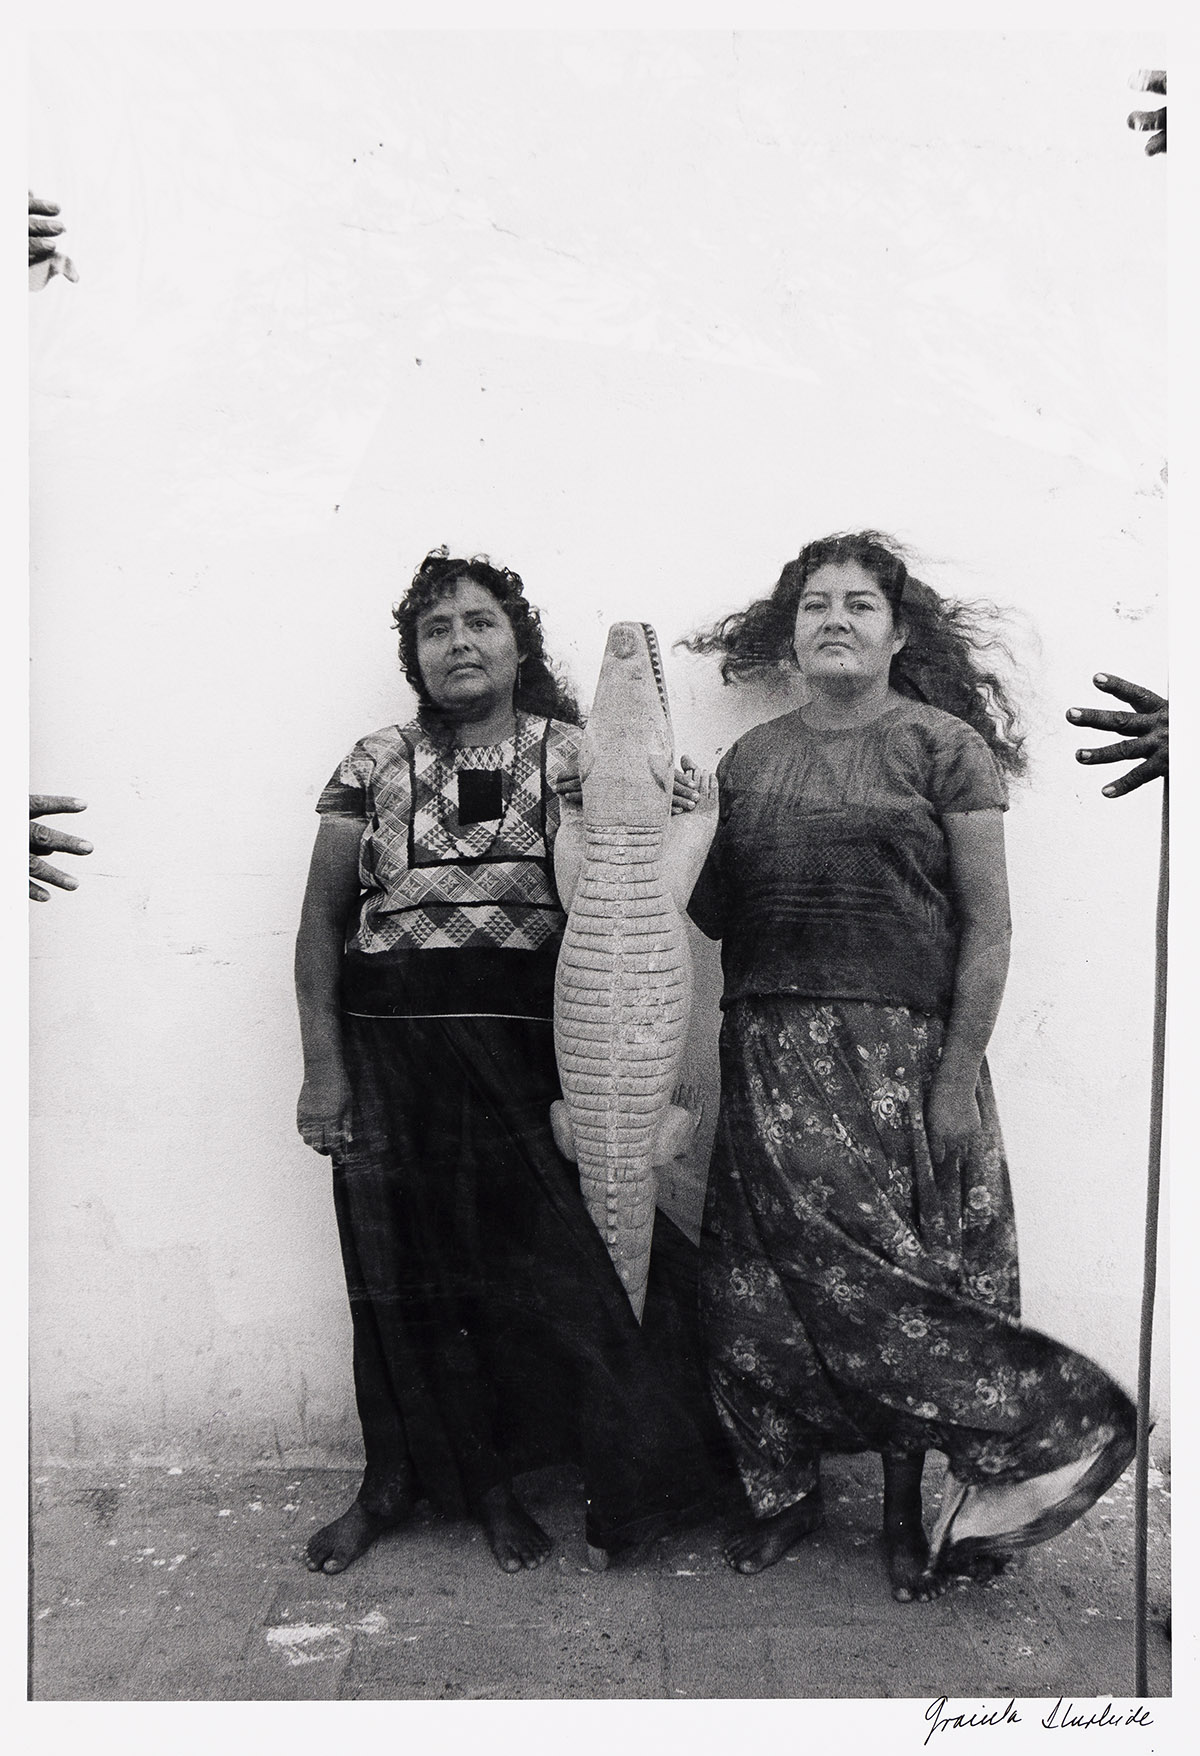 GRACIELA ITURBIDE (1942- ) Fiesta del Lagarto [Festival of the Lizard], Juchitán, Mexico.